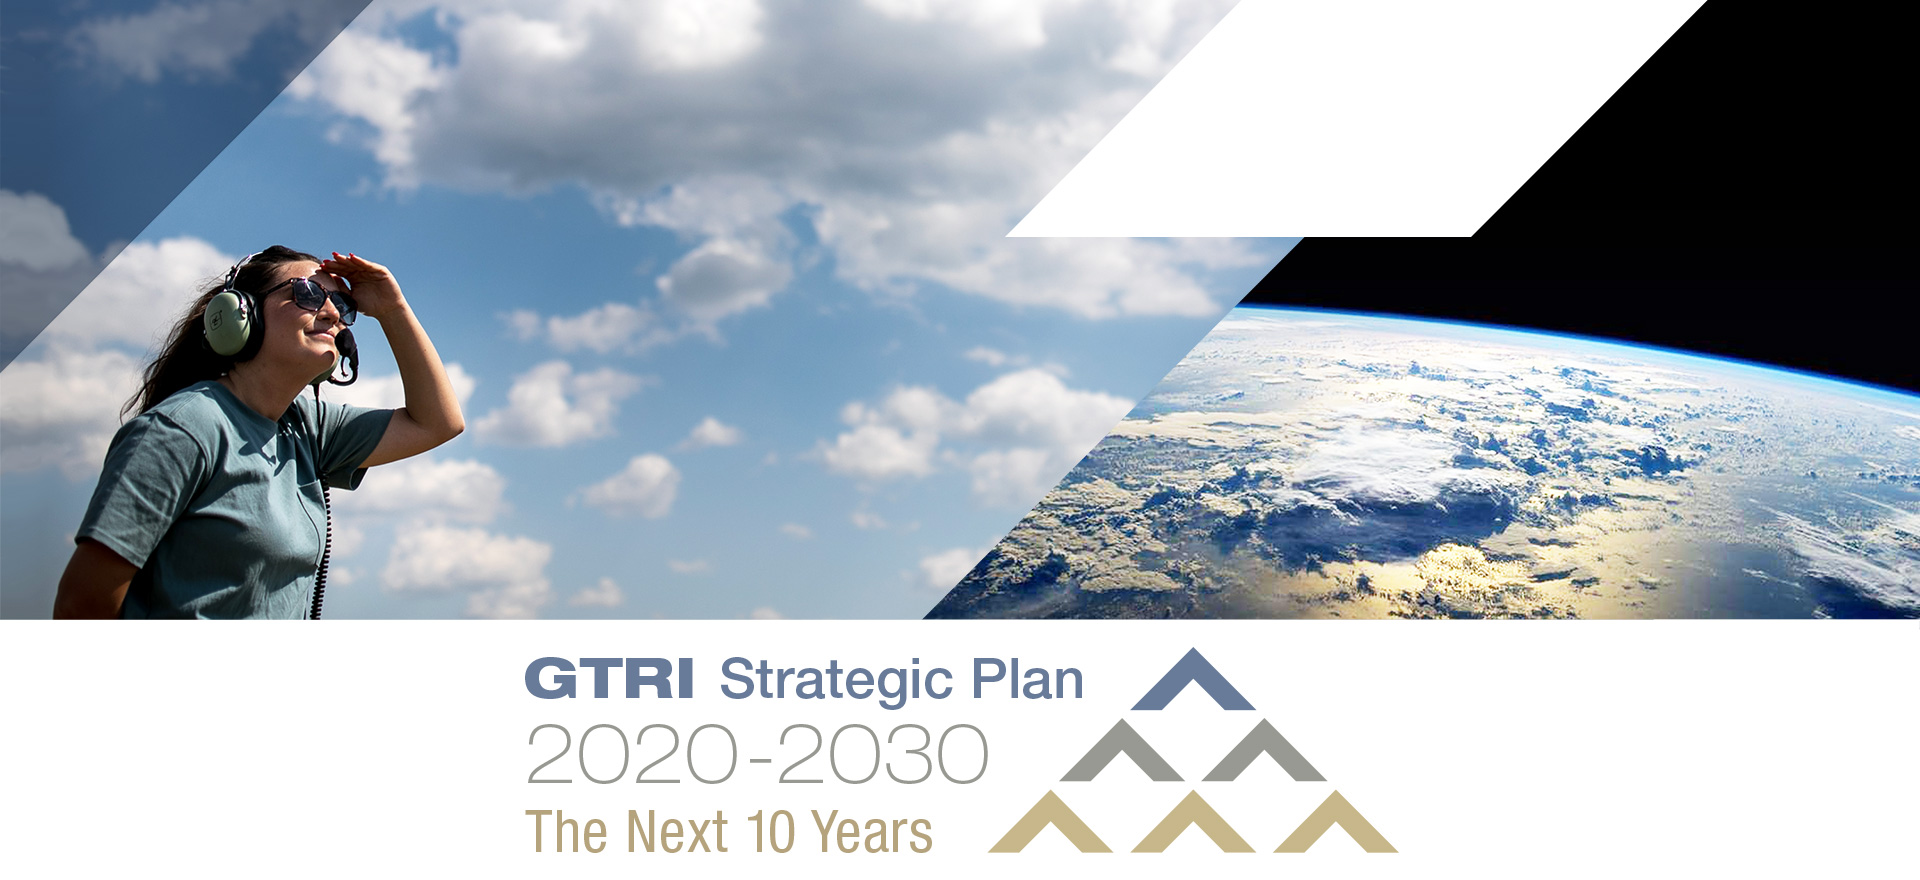 GTRI Strategic Plan 2020-2030